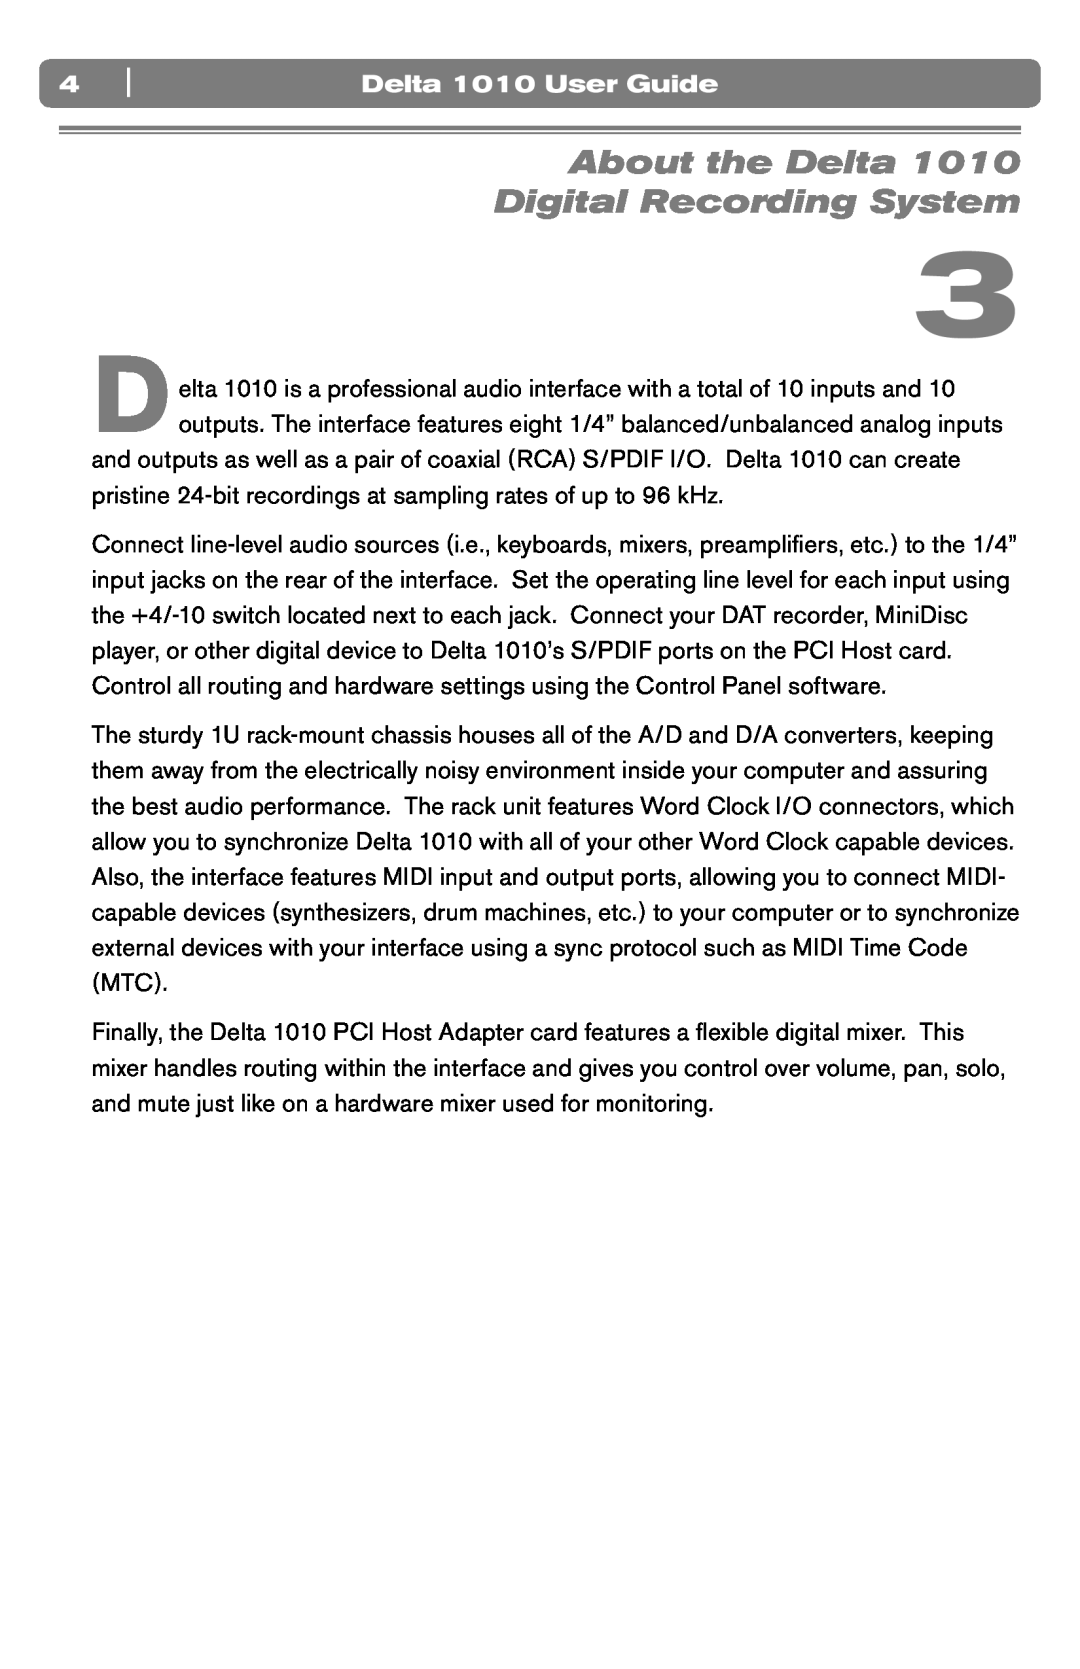 M-Audio DELTA 1010 manual About the Delta Digital Recording System, Delta 1010 User Guide 